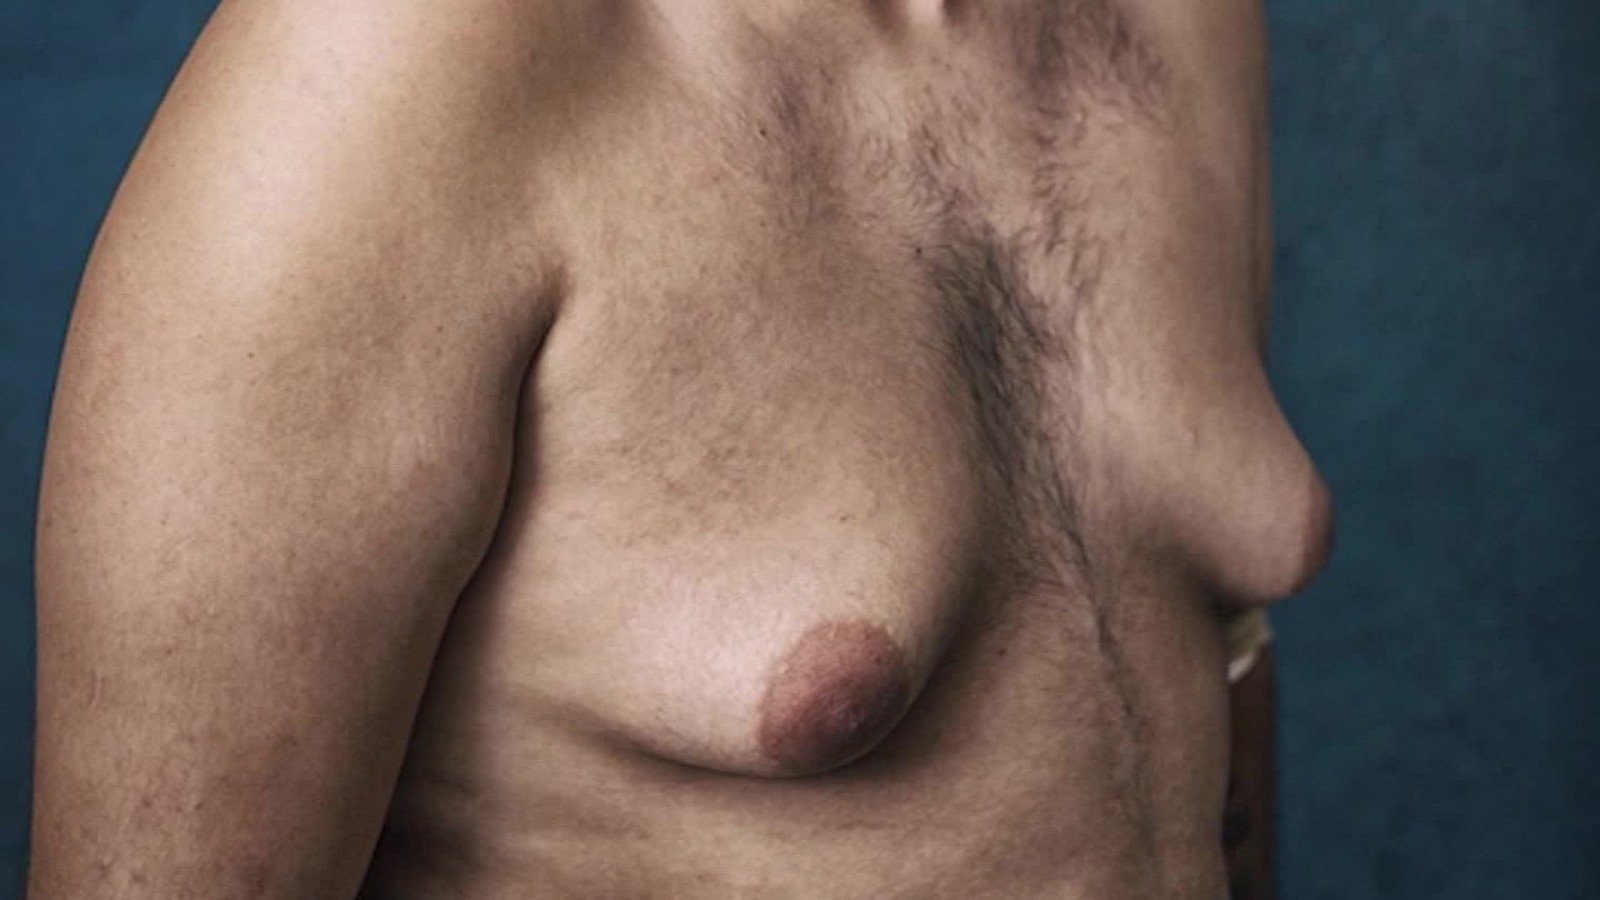 Big areola nipples breasts